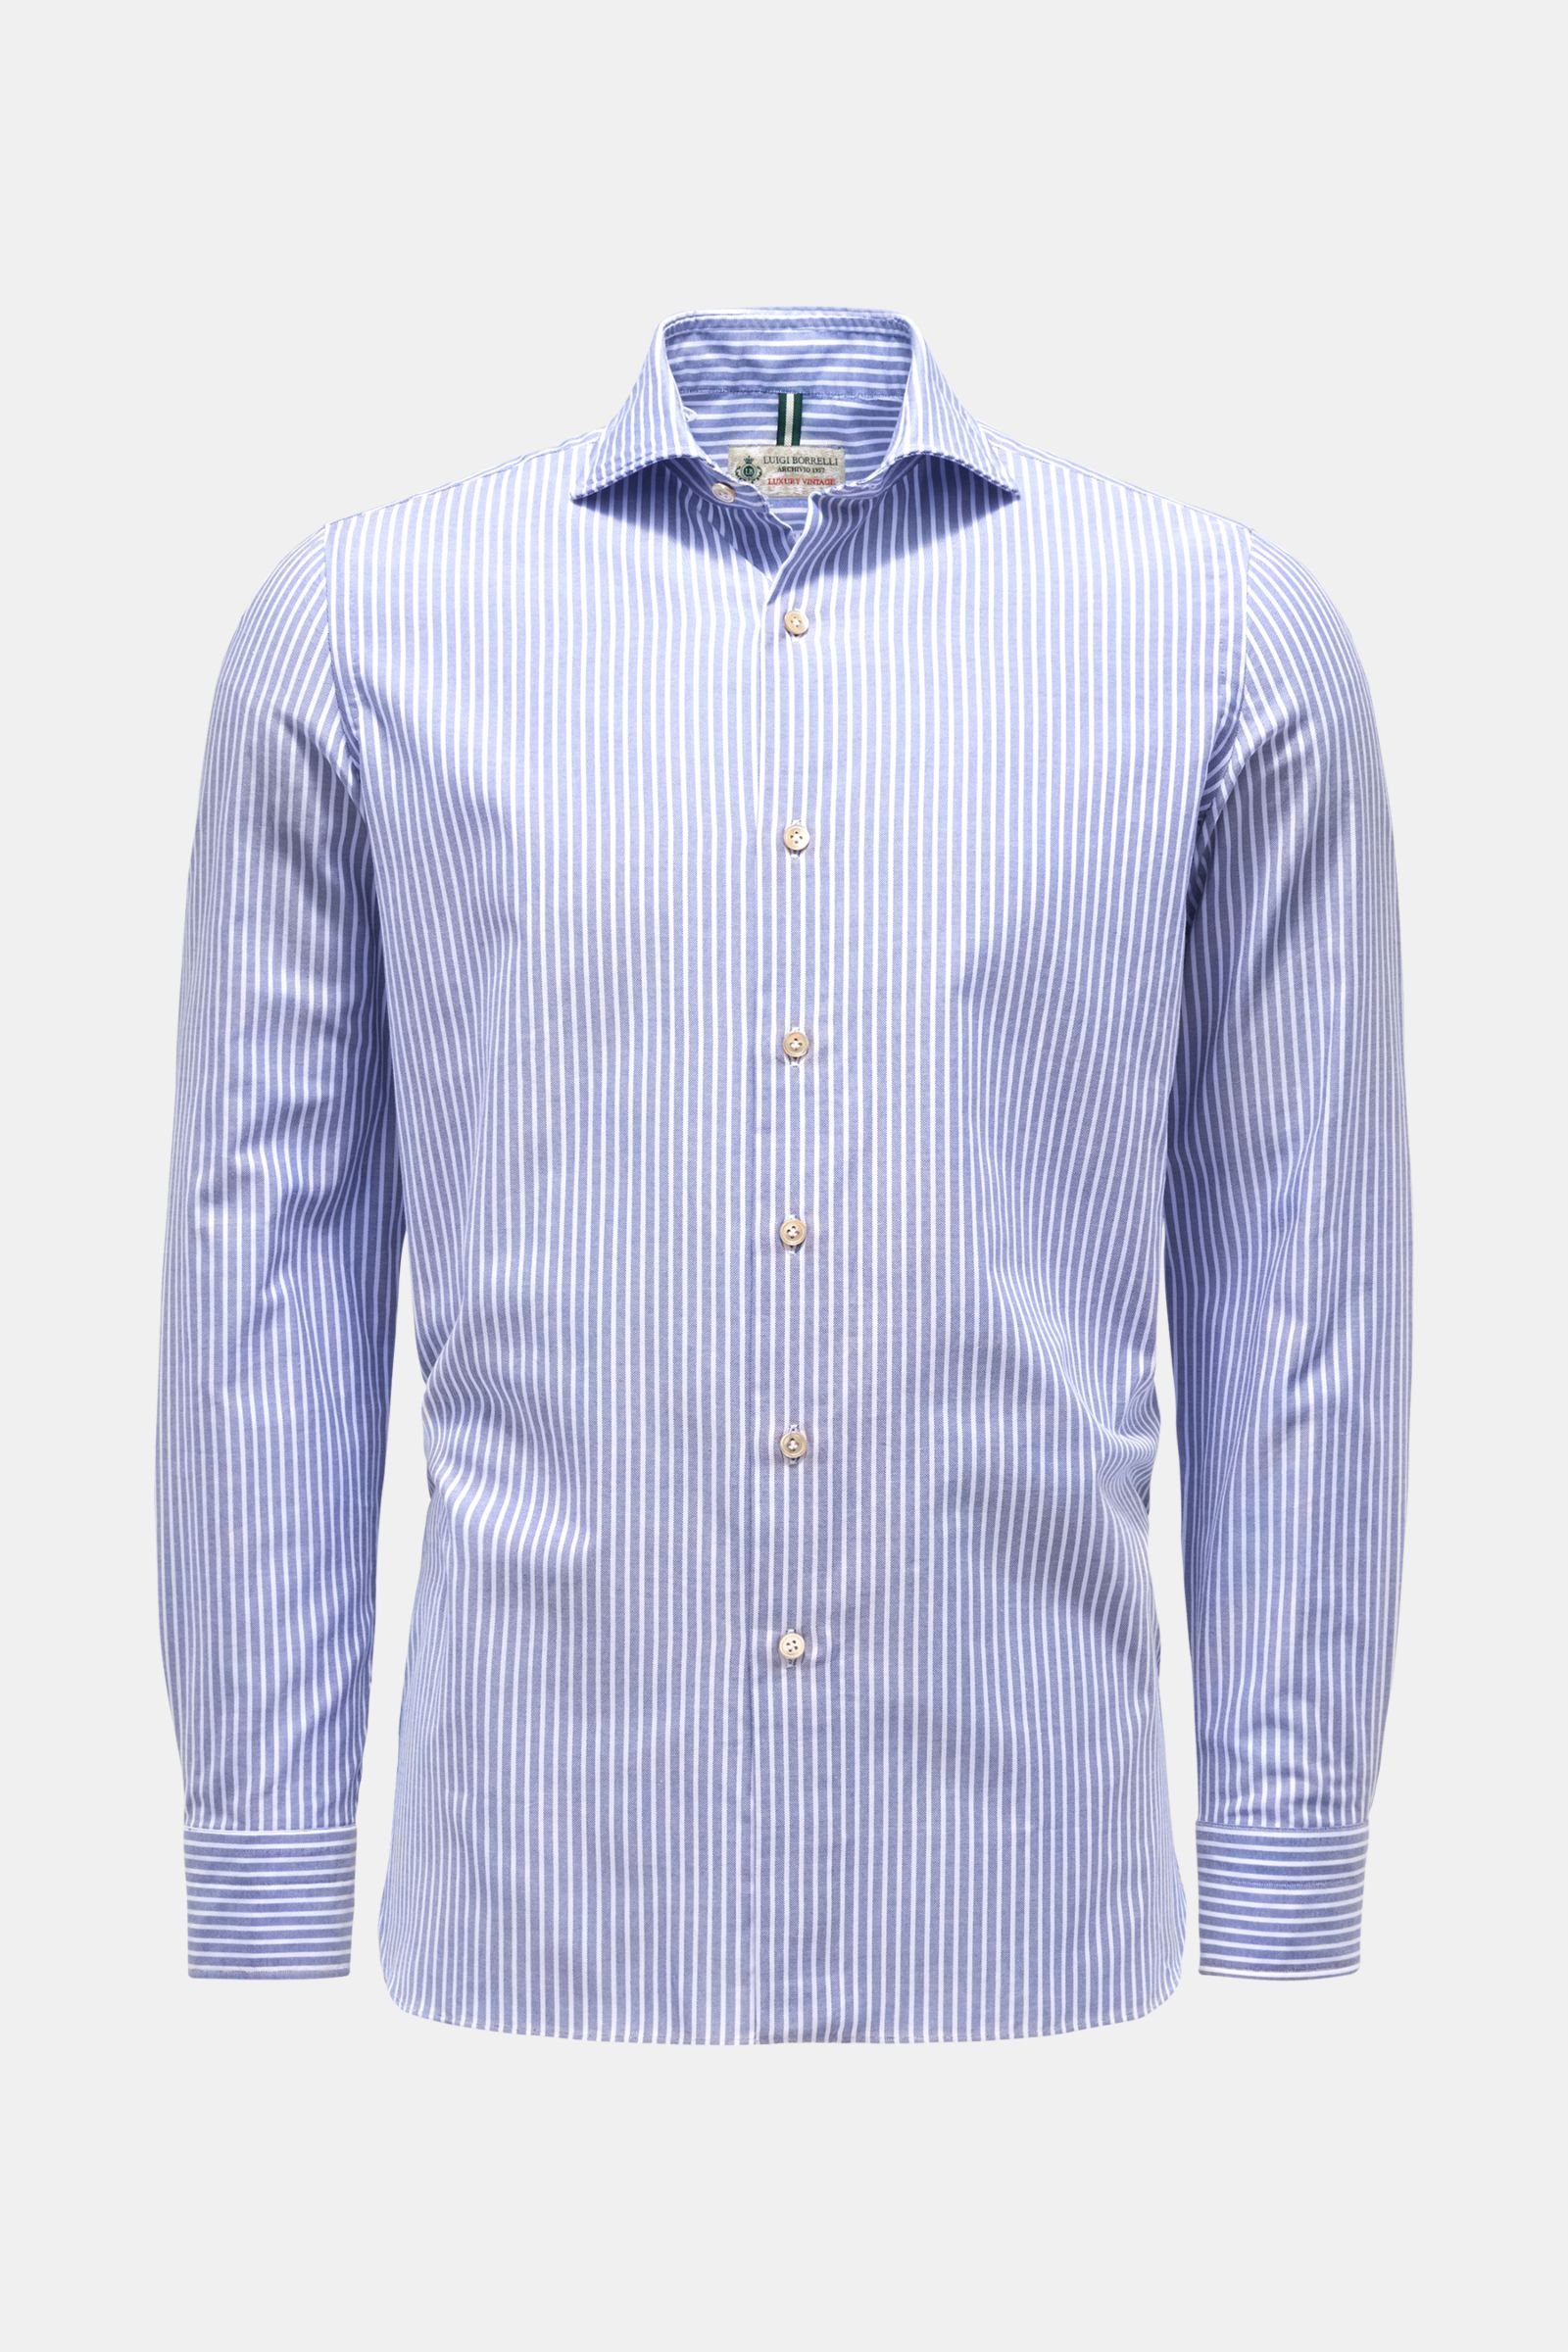 Oxford shirt 'Nando' shark collar grey-blue/white striped